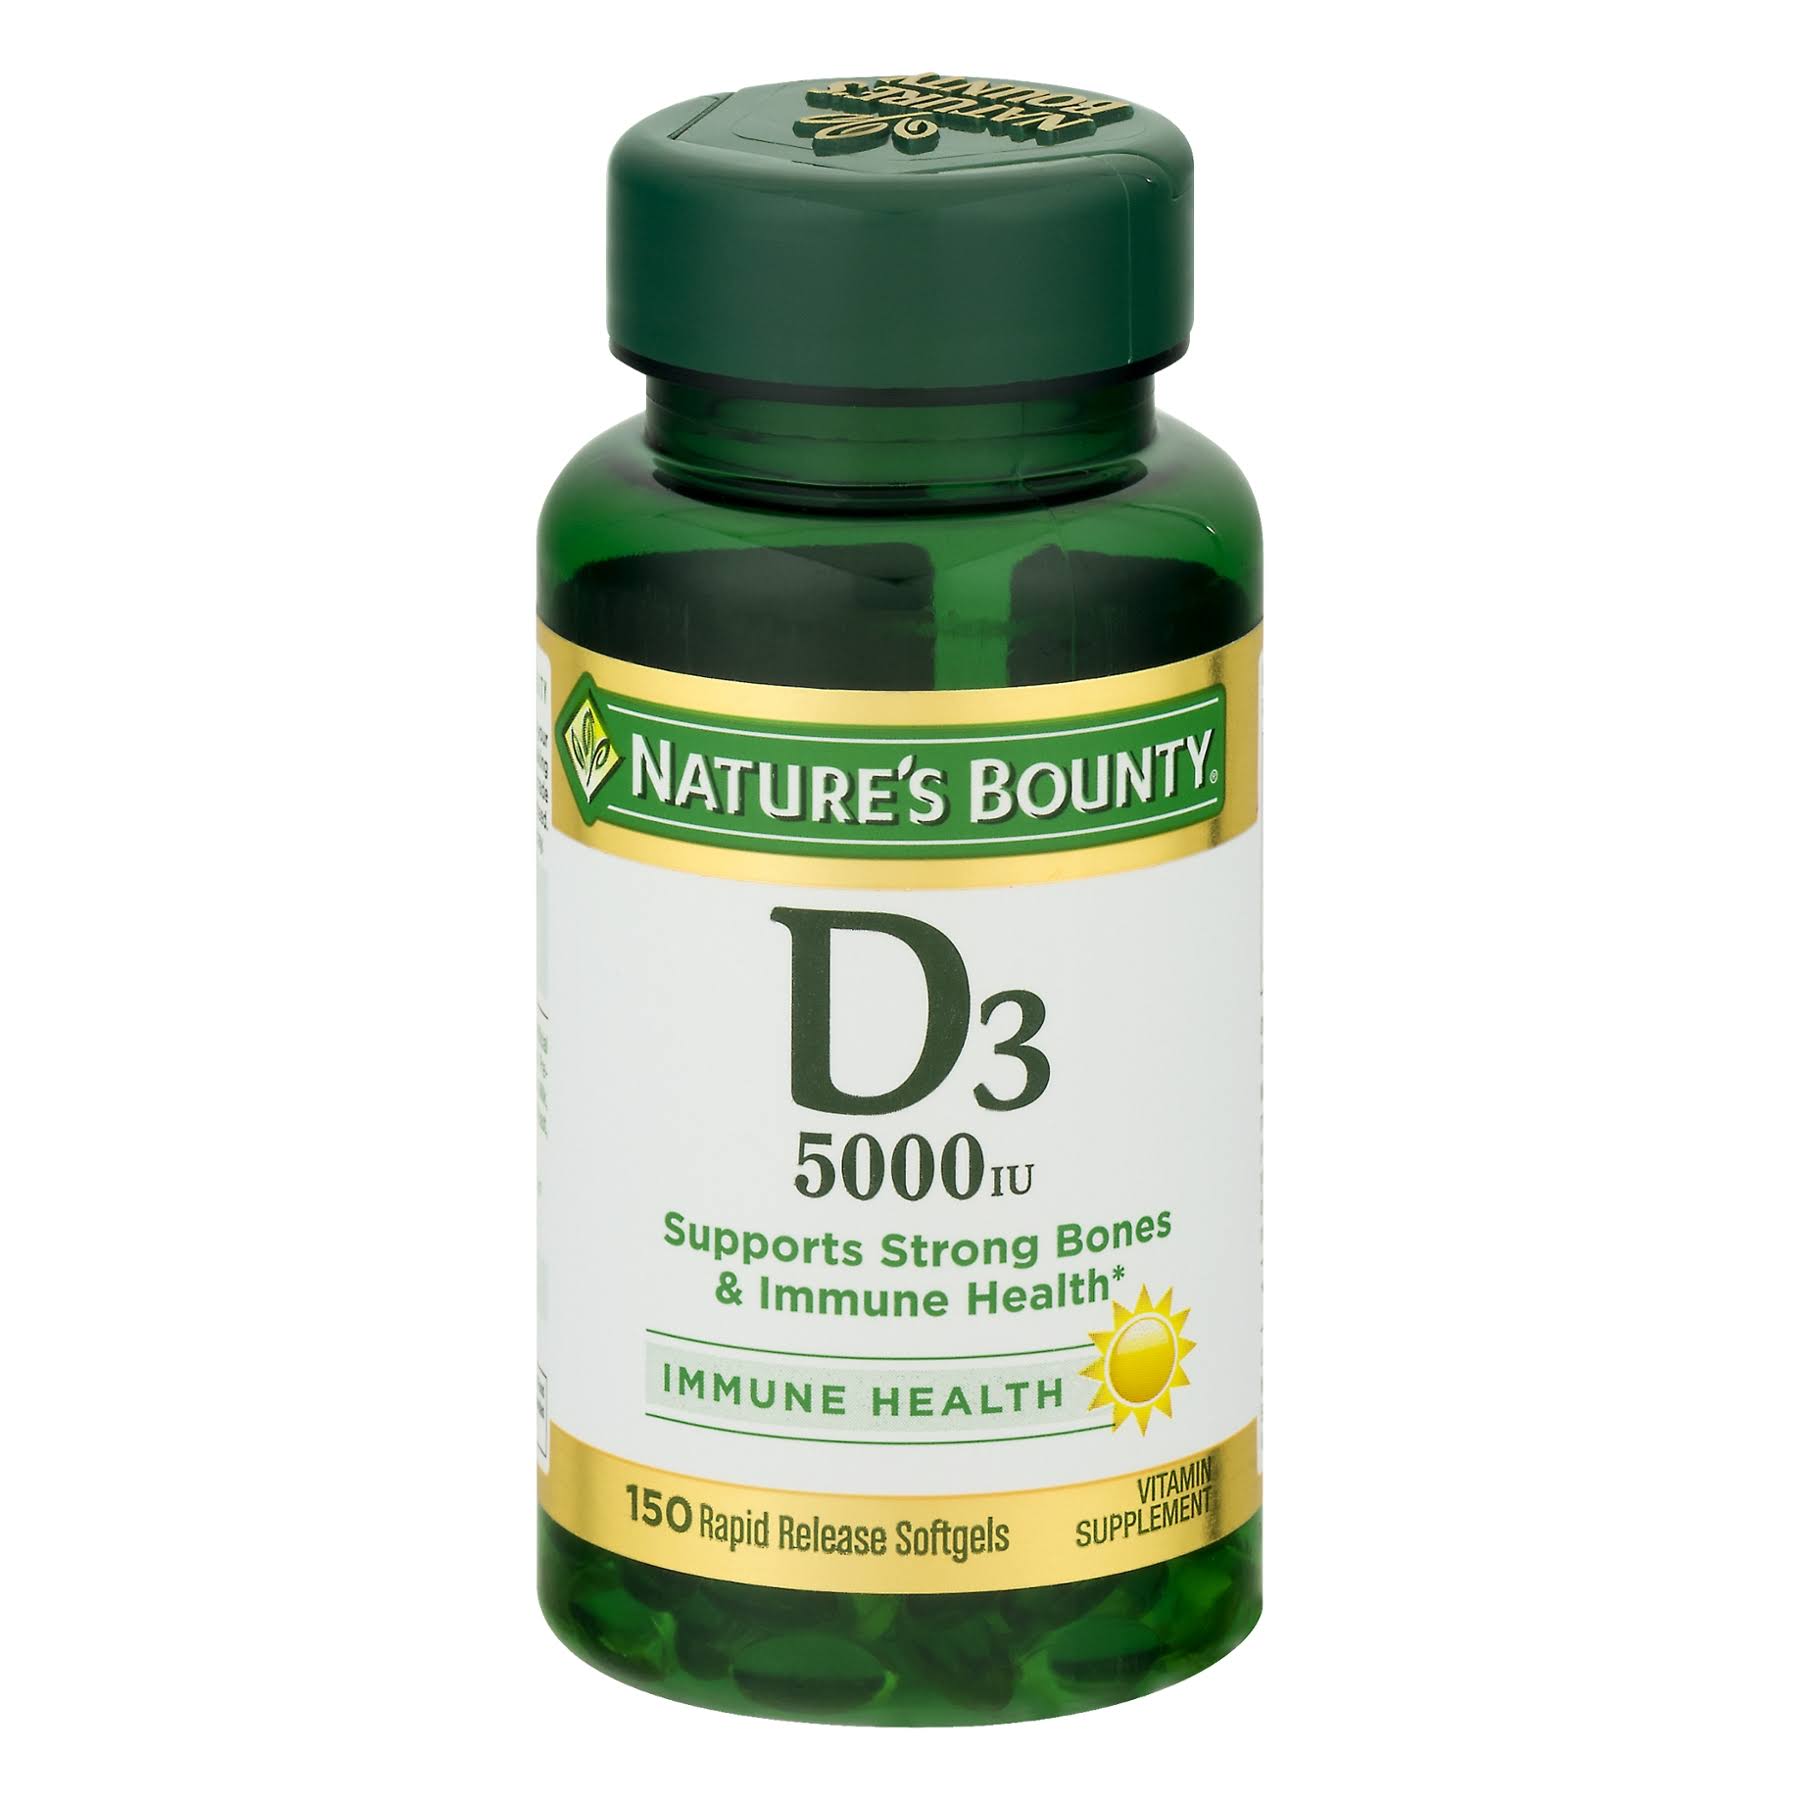 Nature's Bounty Vitamin D3 - 5000iu